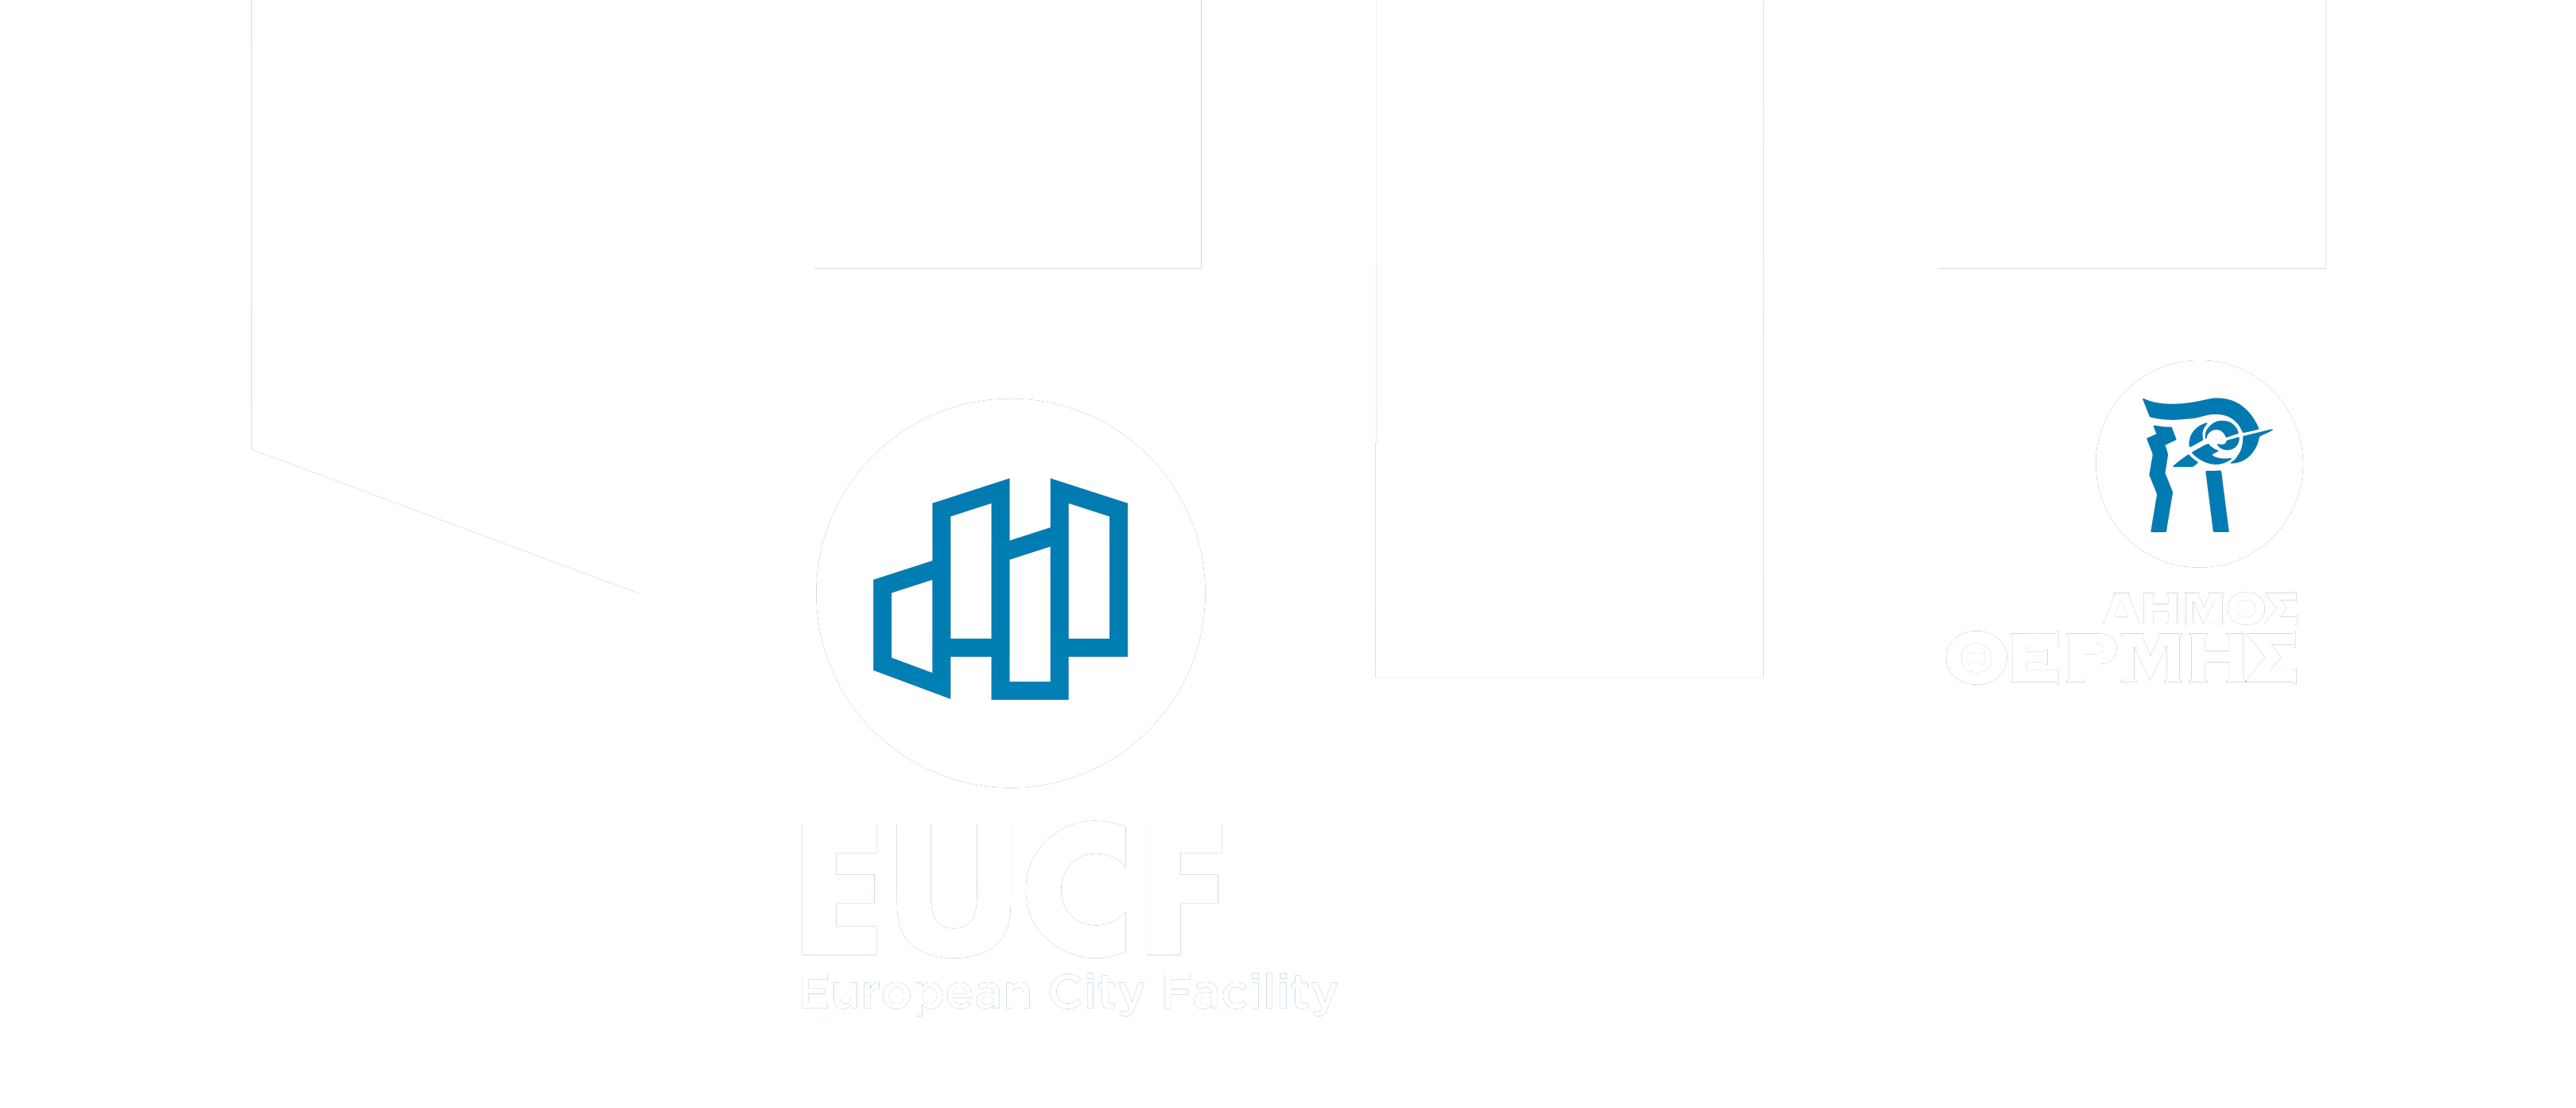 European City Facility - Δήμος Θέρμης